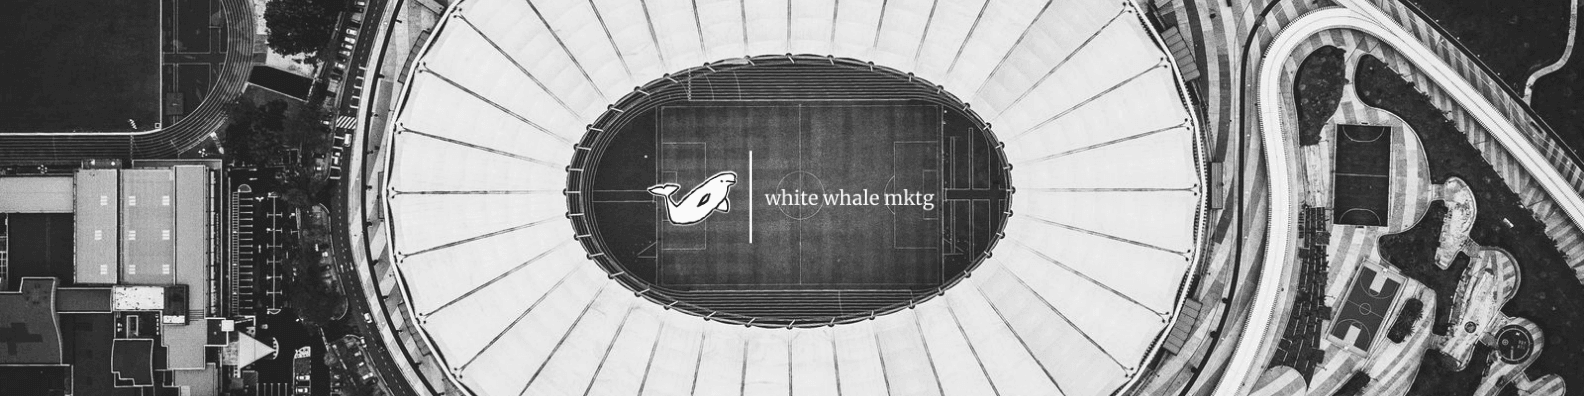 whitewhalemktg bannière